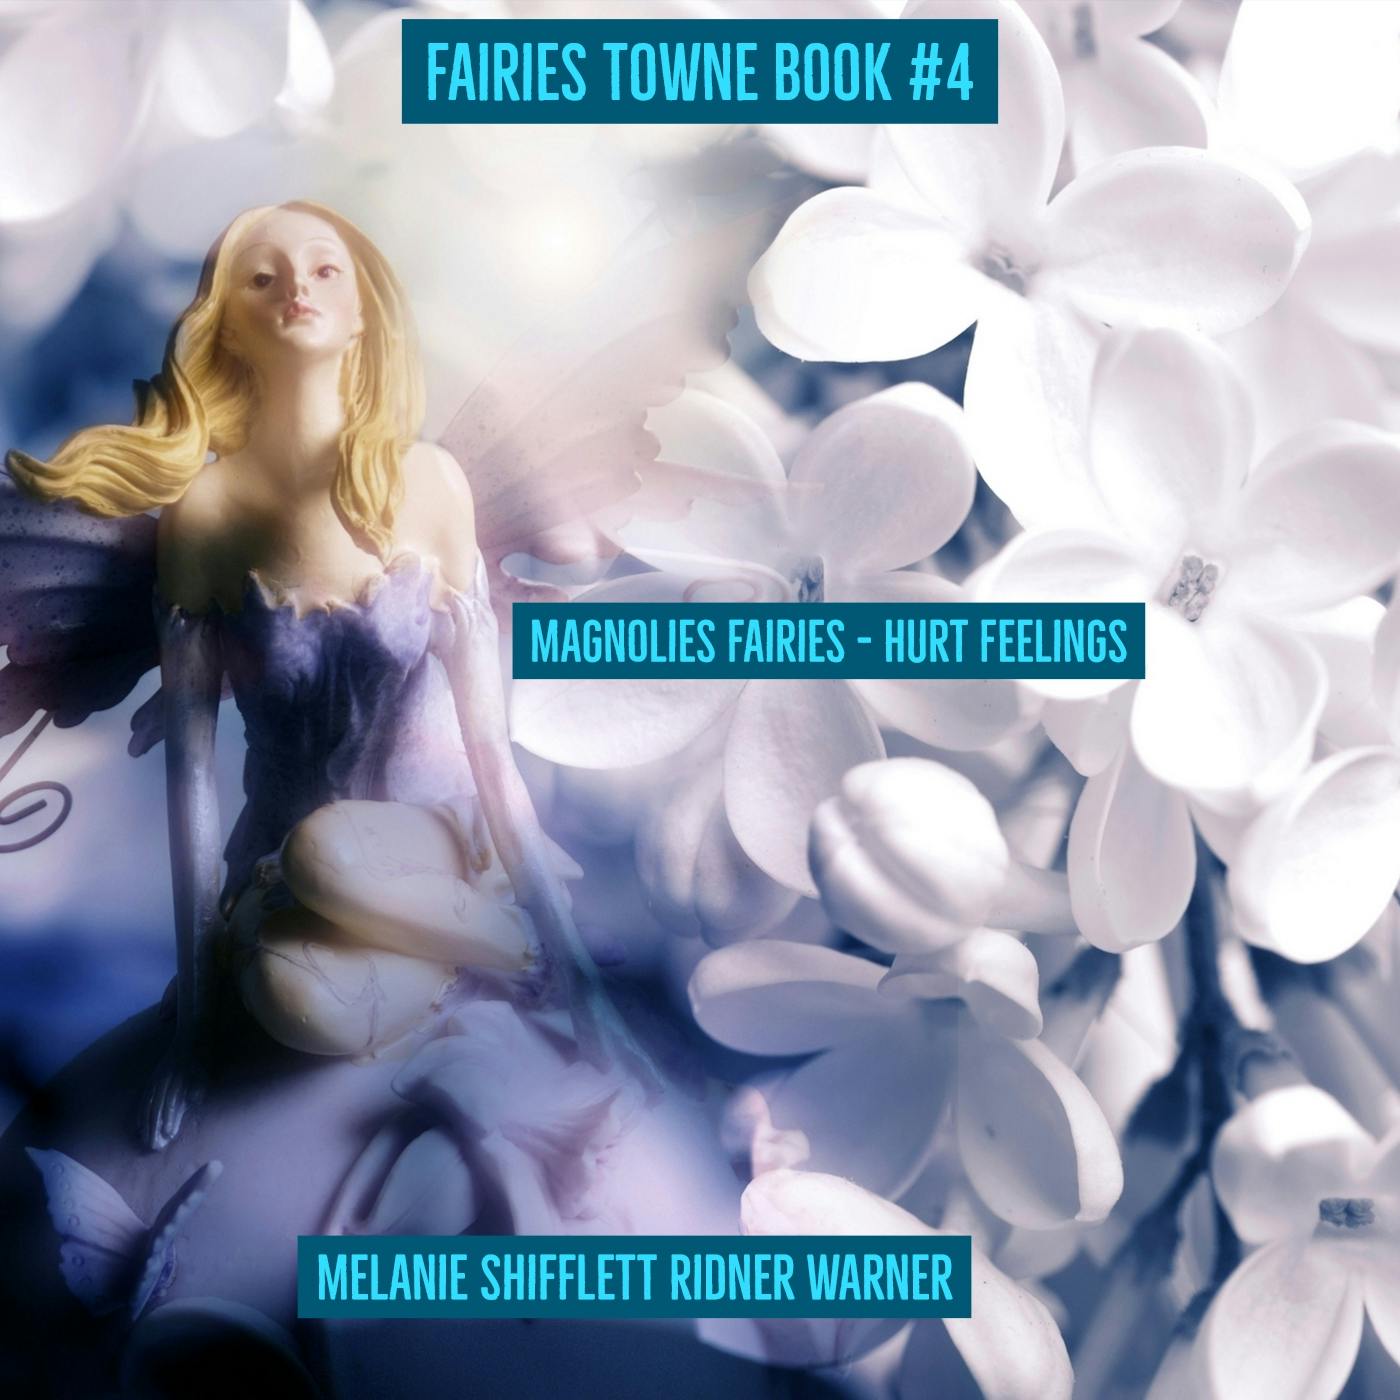 Magnolia Fairies: Hurt Feelings - Melanie Shifflett Ridner Warner